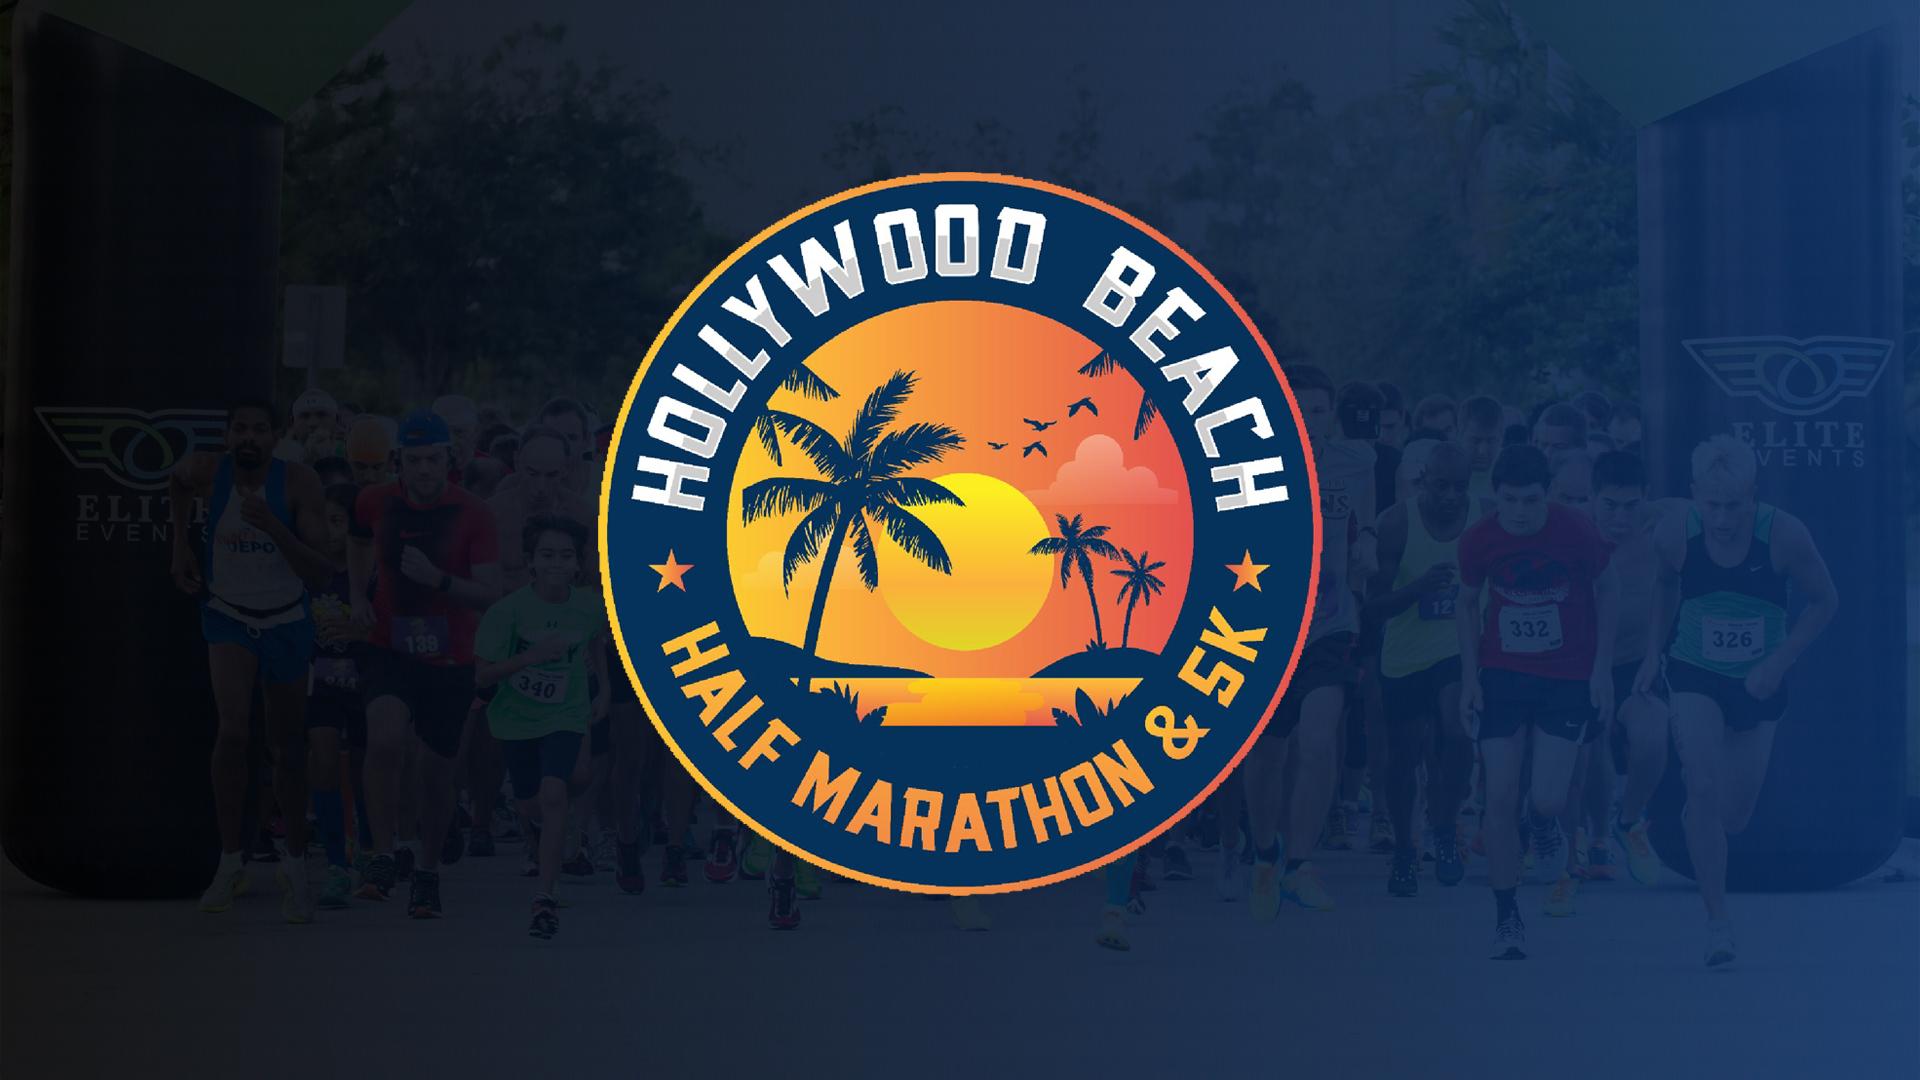 Hollywood Beach Half Marathon & 5k
Sat Nov 5, 6:30 AM - Sat Nov 5, 10:00 AM
in 16 days